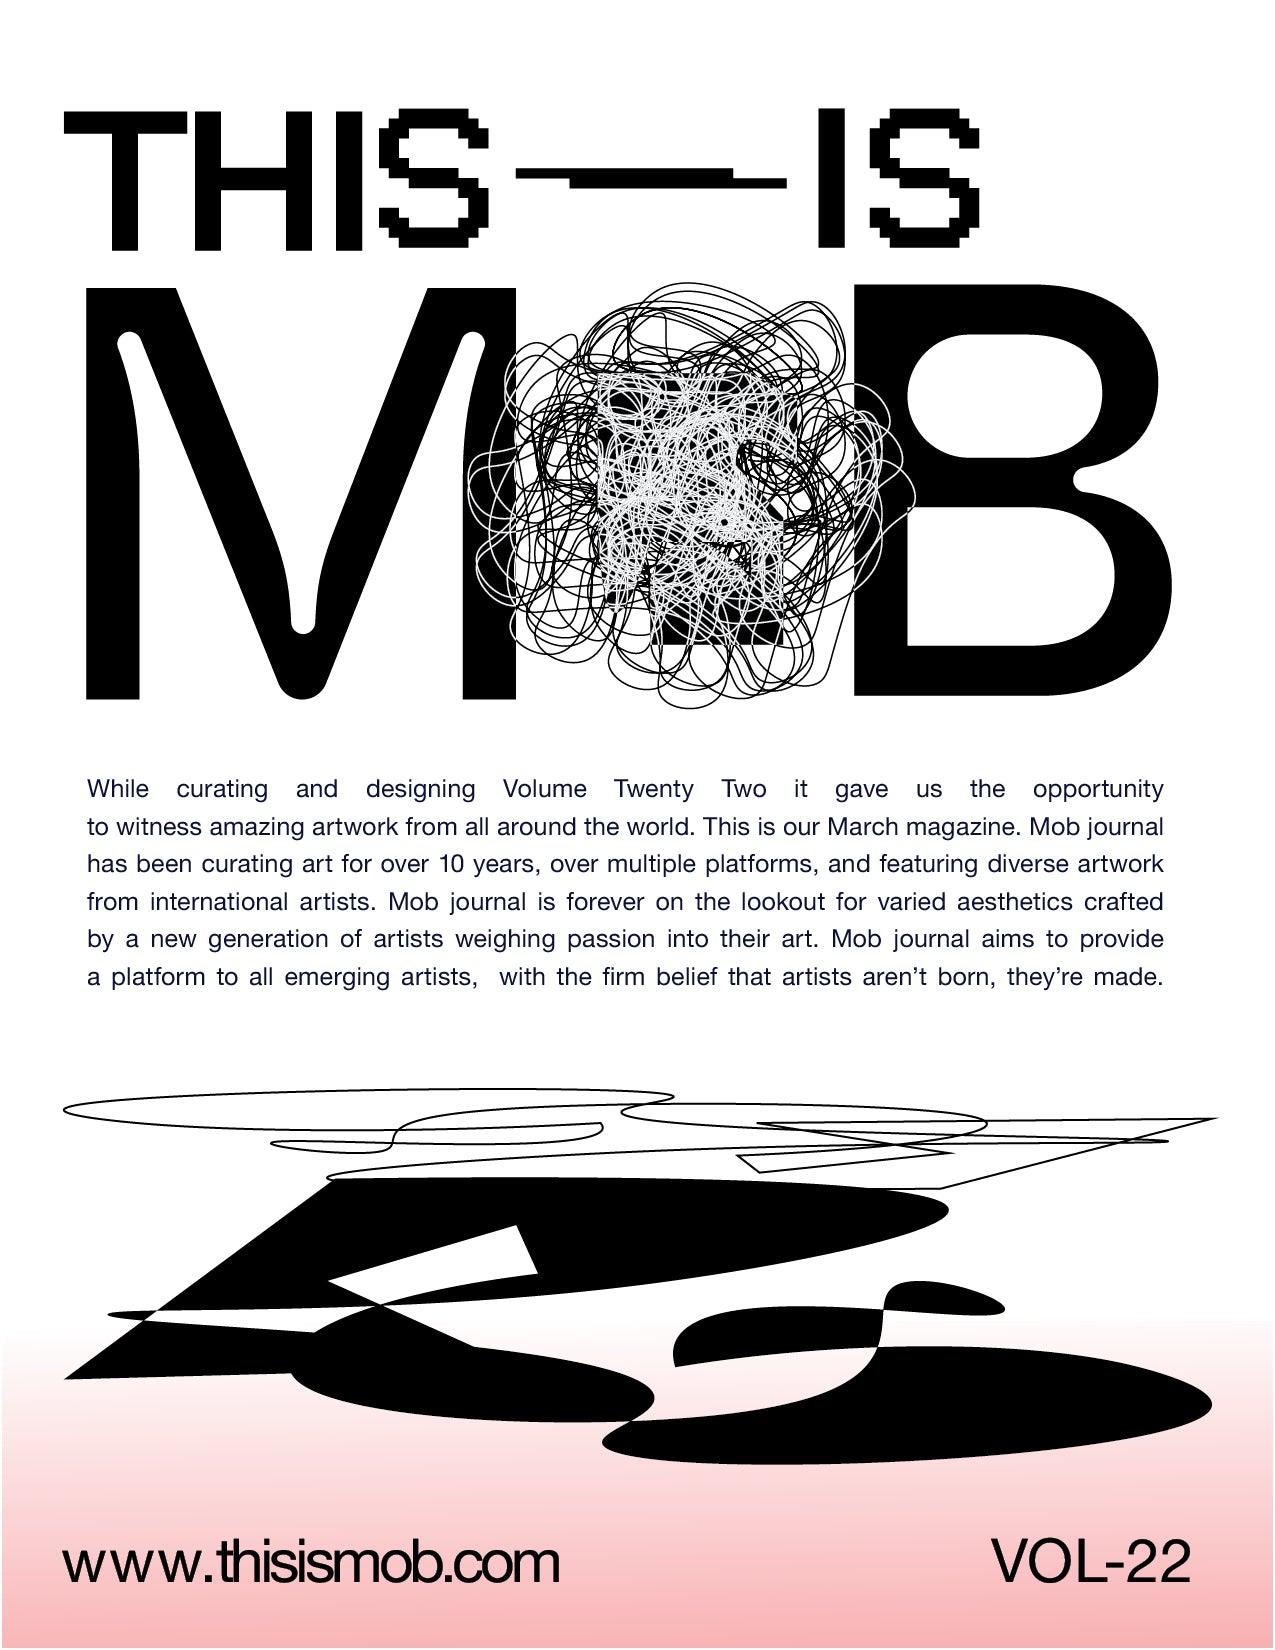 MOB JOURNAL | VOLUME TWENTY TWO | ISSUE #48 - Mob Journal